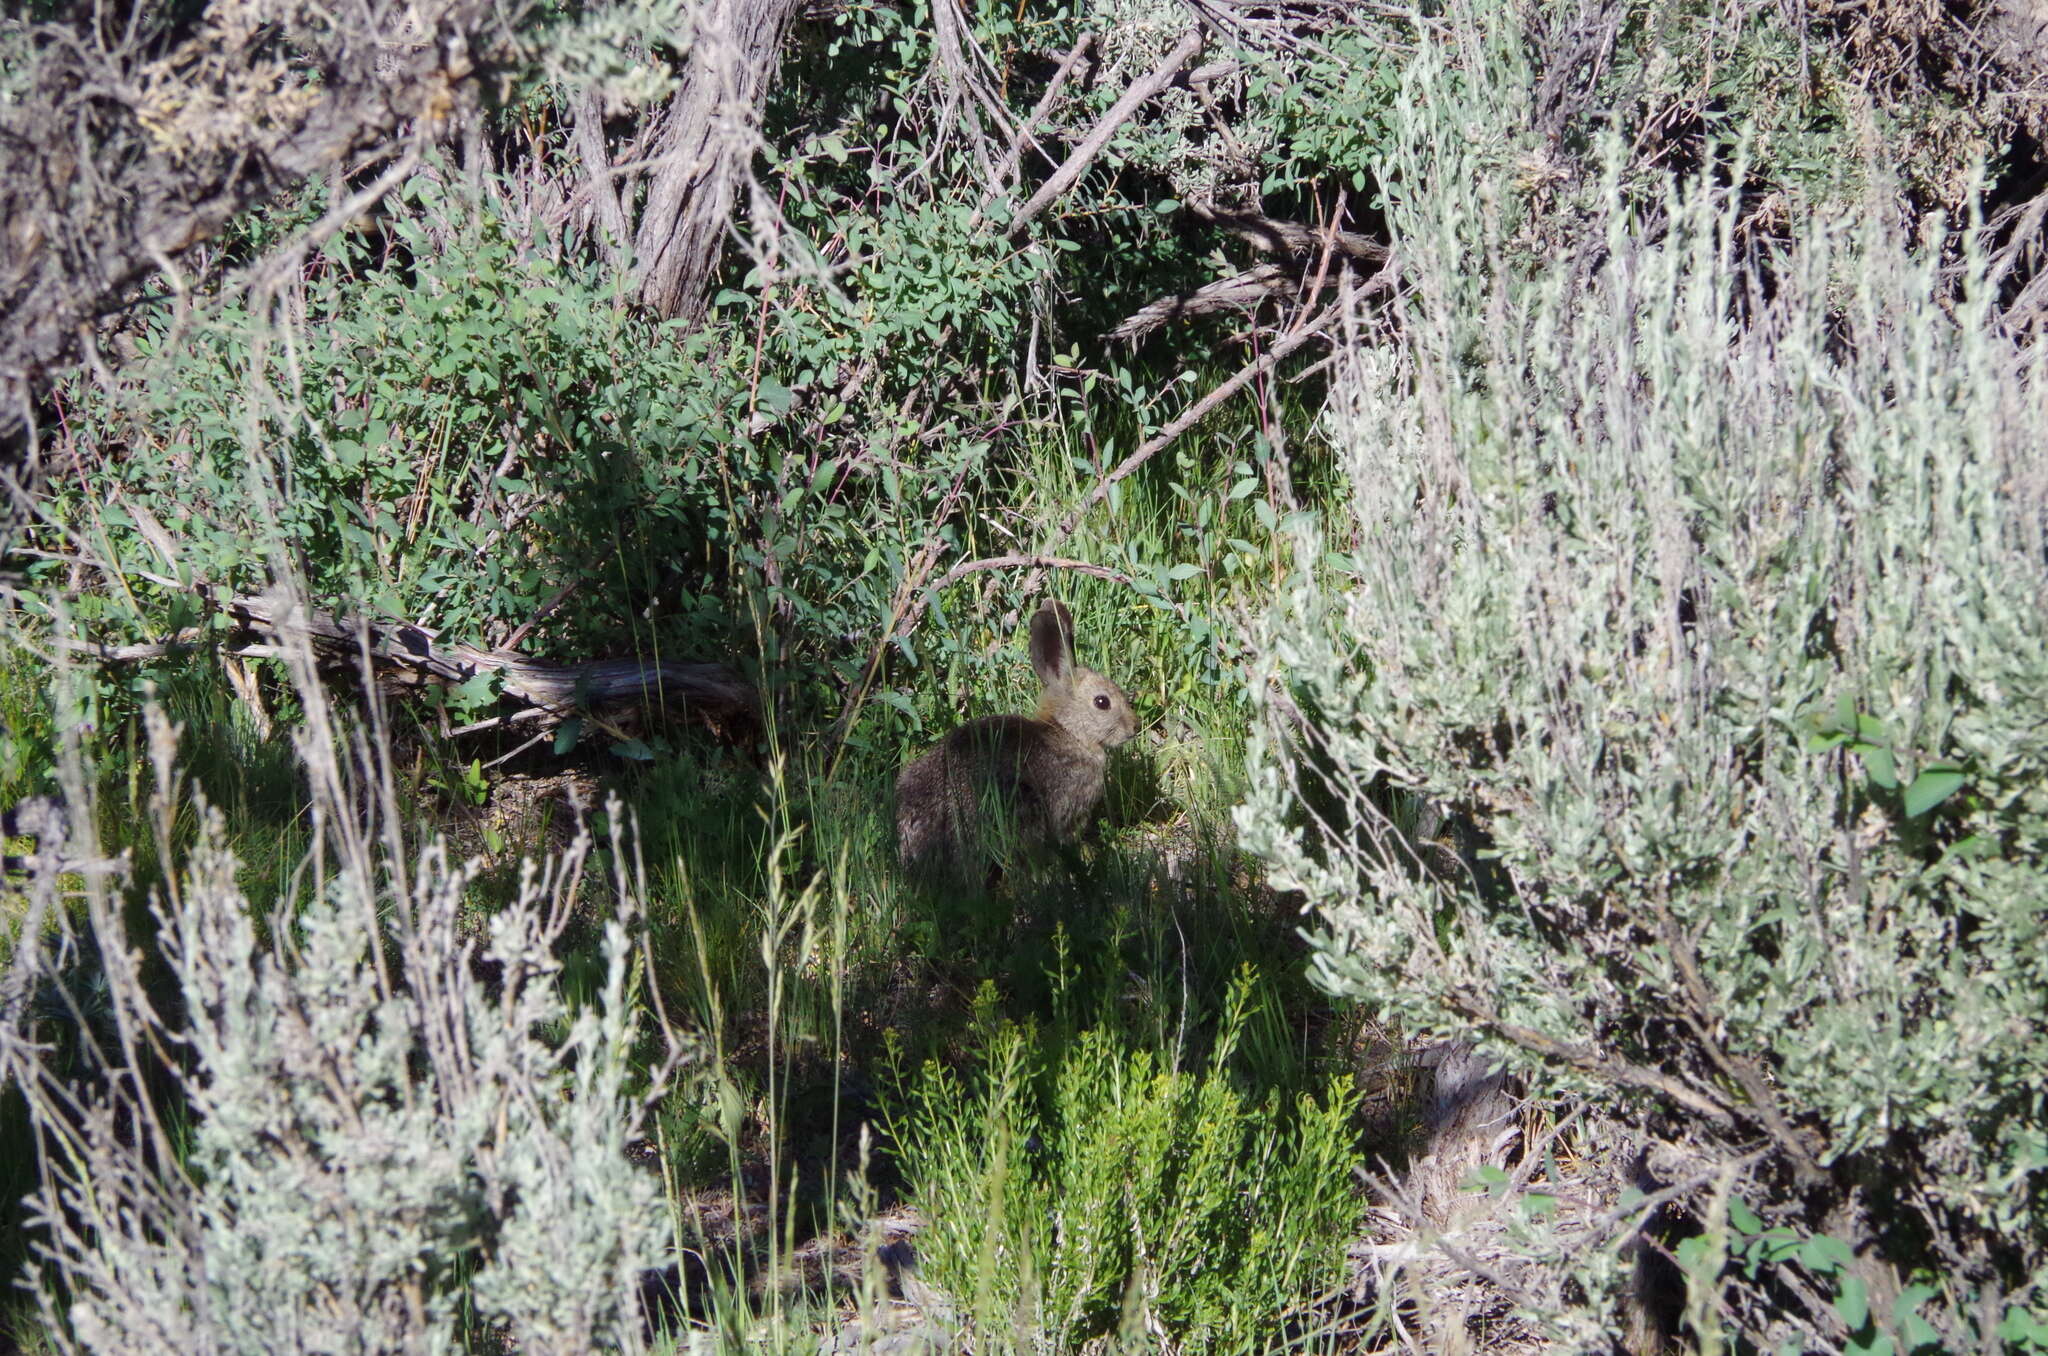 Image of pygmy rabbit